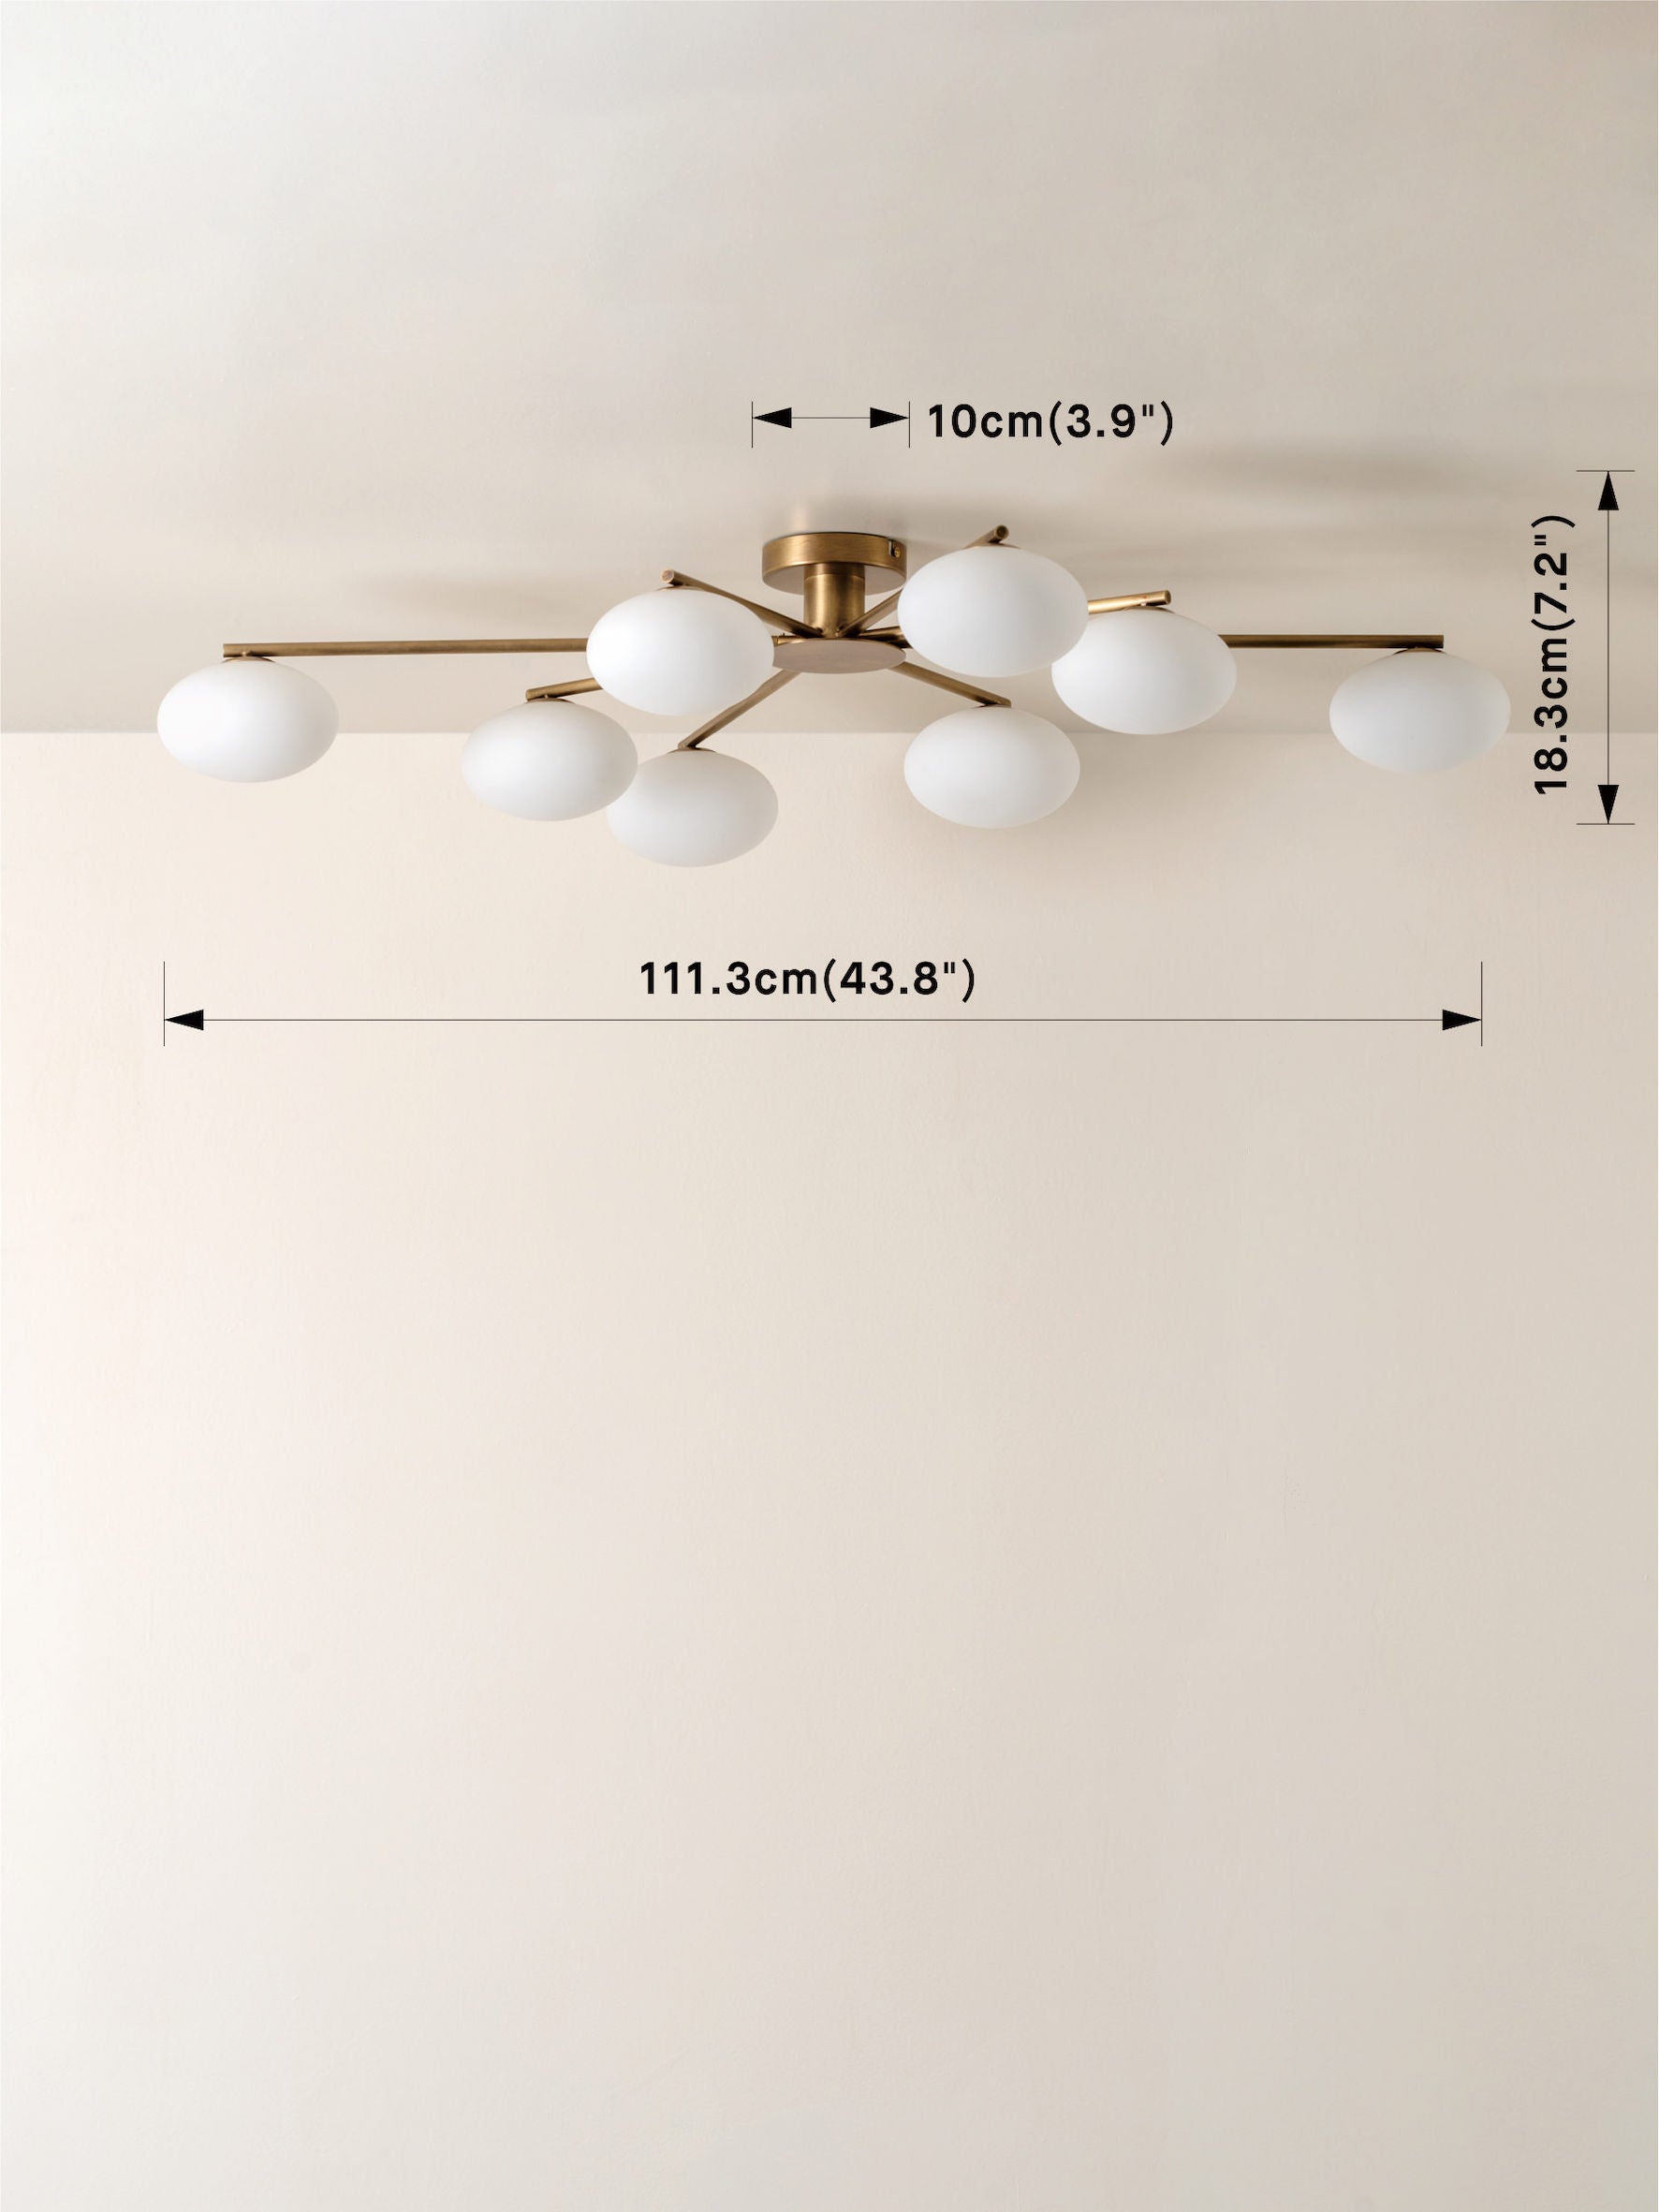 Imperial - 8 light aged brass and opal flush pendant | Ceiling Light | Lights & Lamps Inc | Modern Affordable Designer Lighting | USA